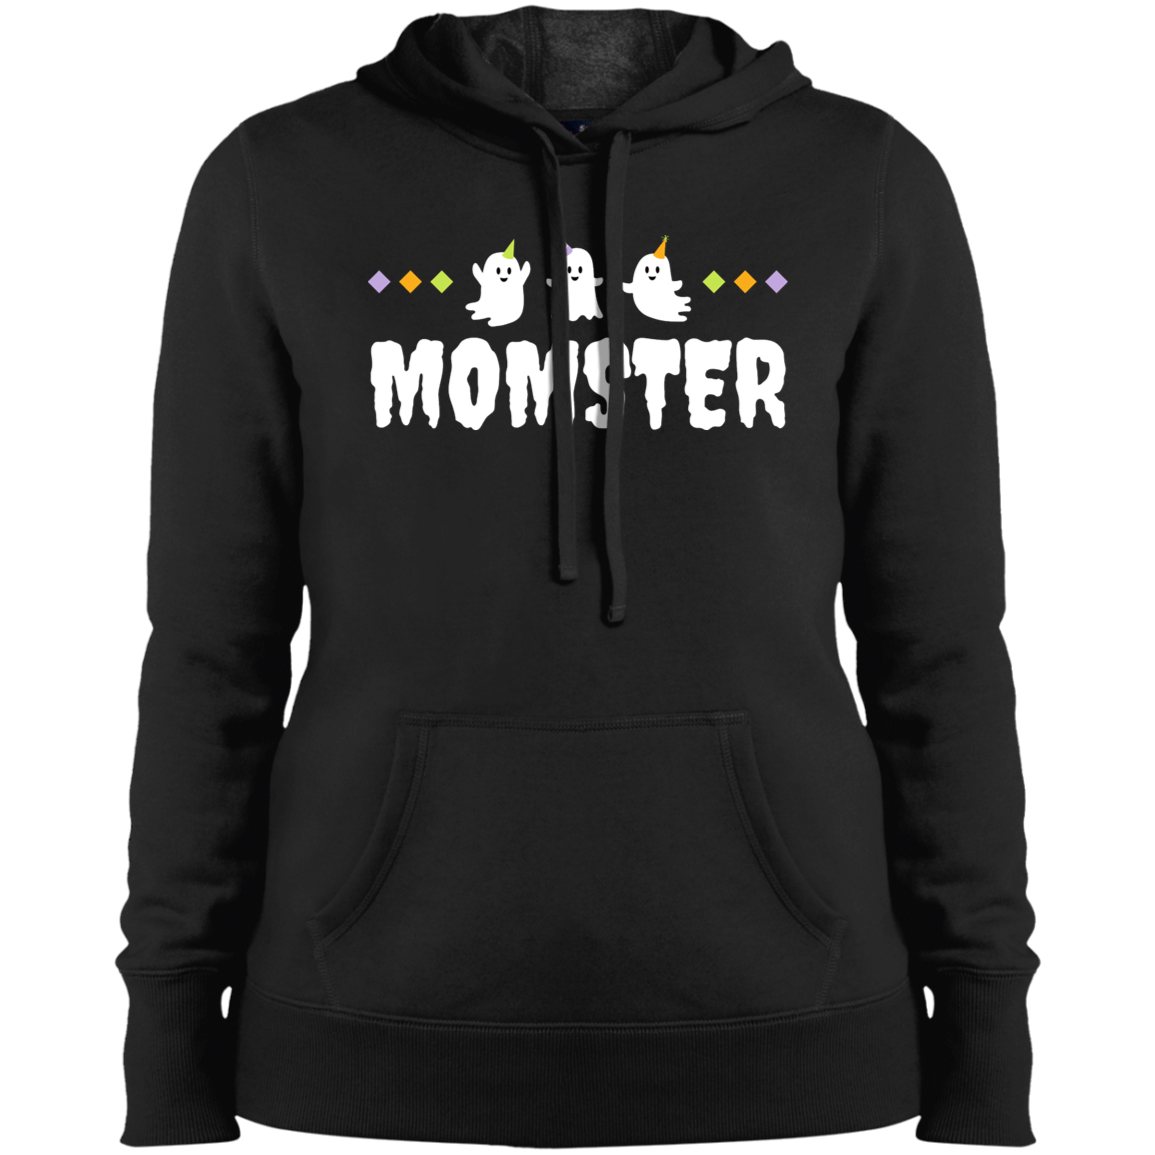 "Momster" Halloween Ghost Pullover Hooded Sweatshirt